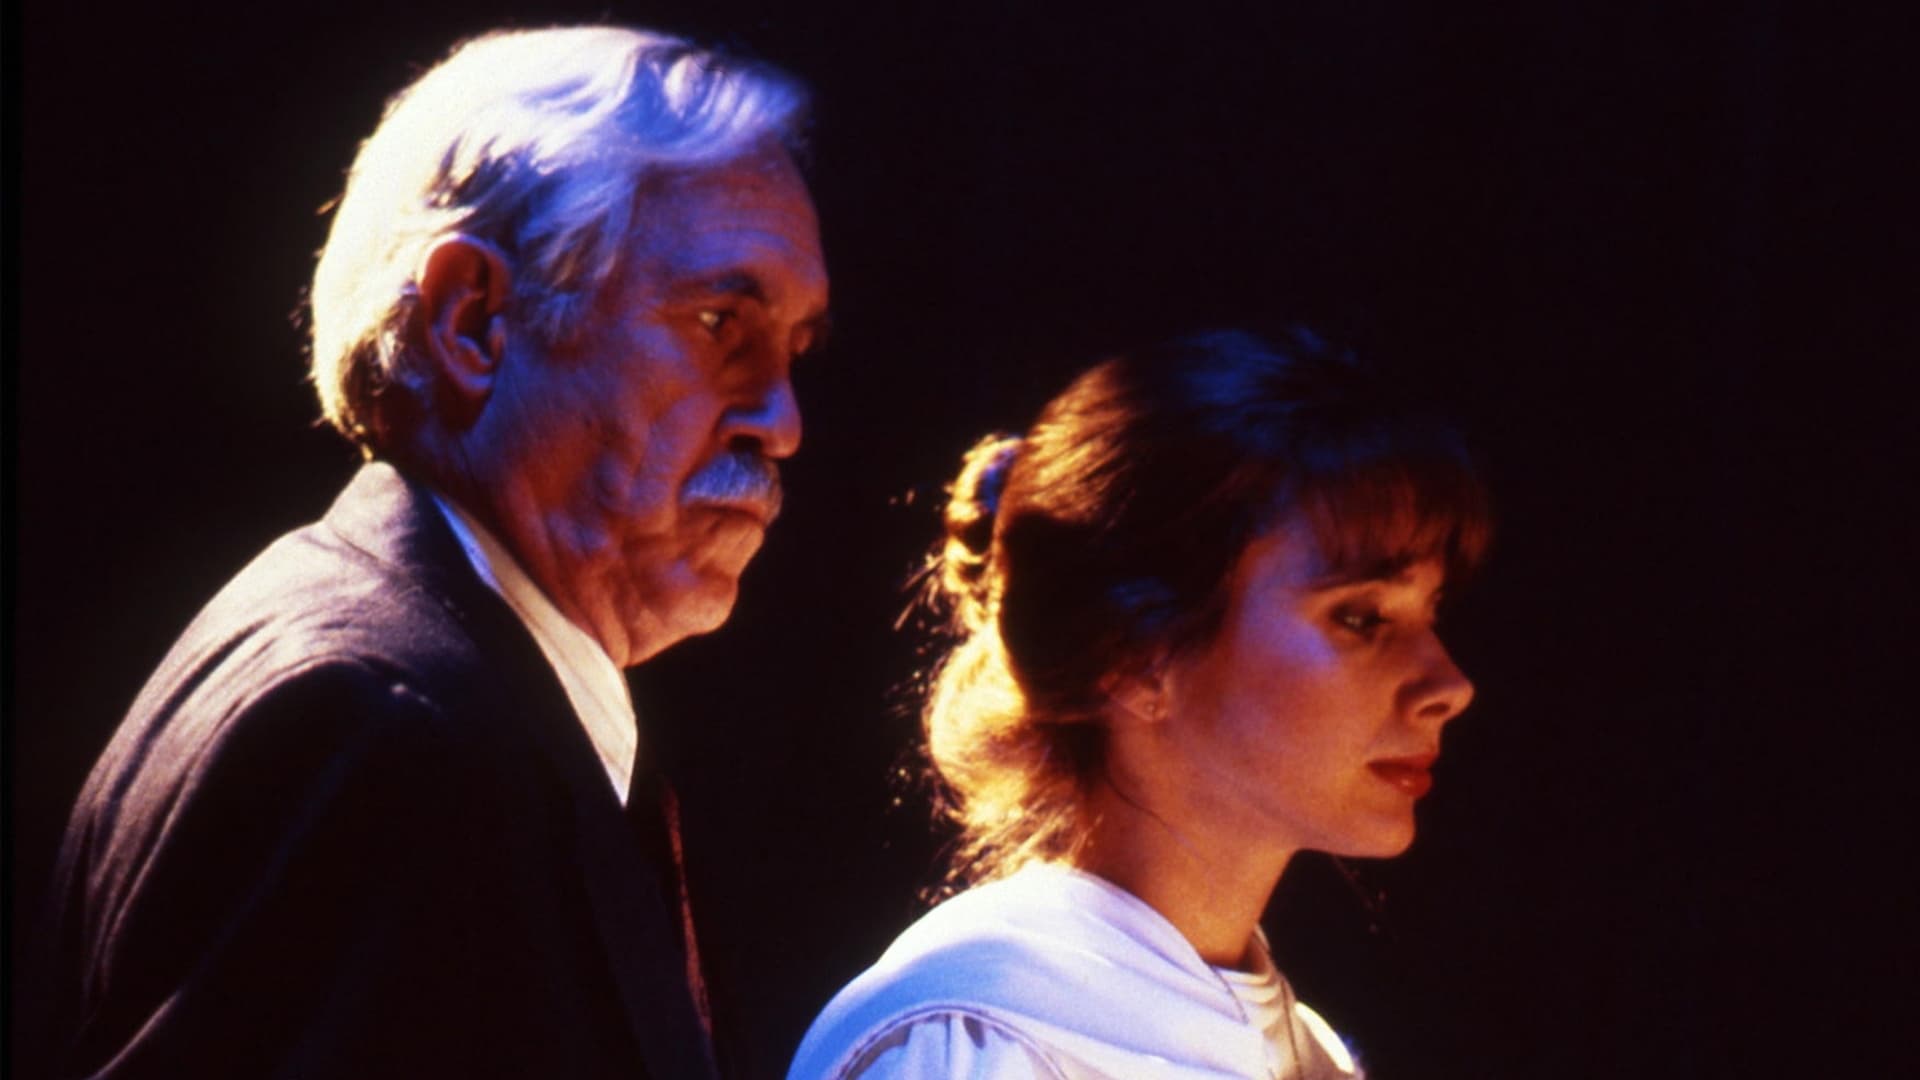 Medium Rosanna Arquette and her father Jason Robards in Black Rainbow (1989)